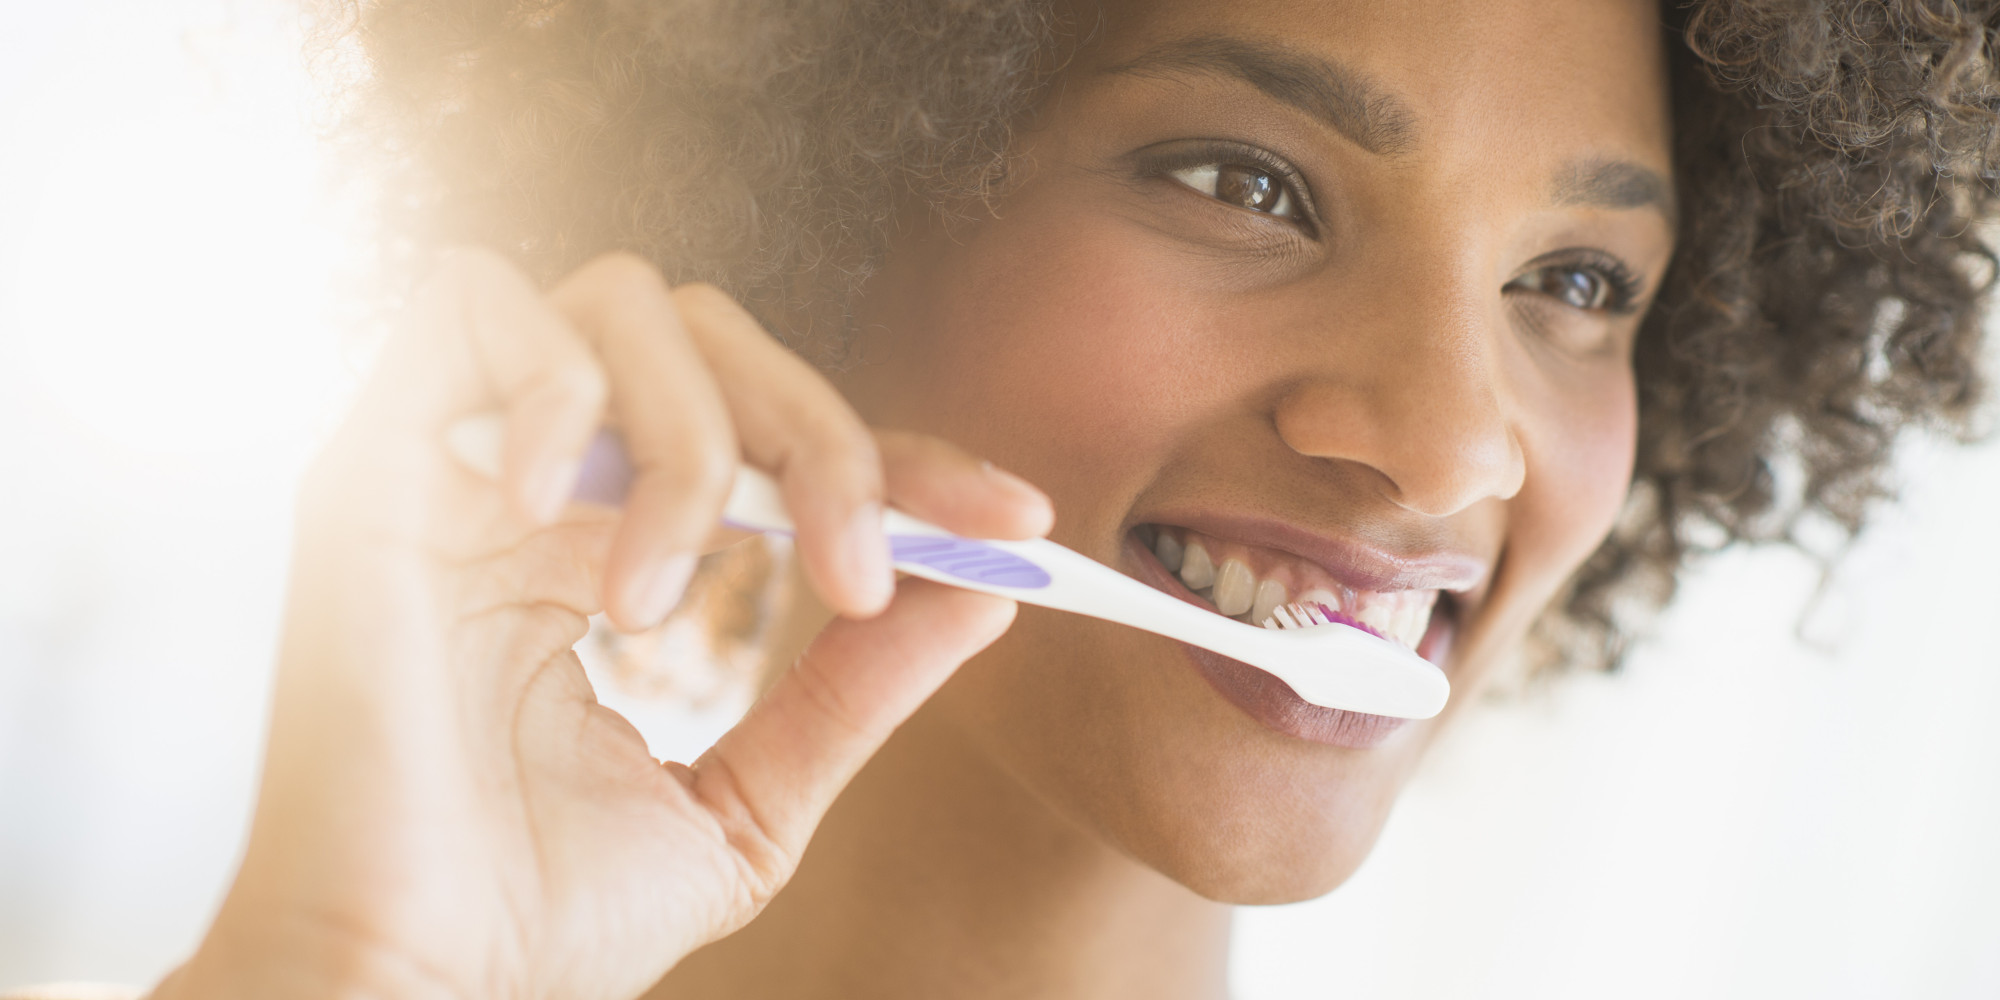 Beauty portrait of woman brushing teeth, studio shot